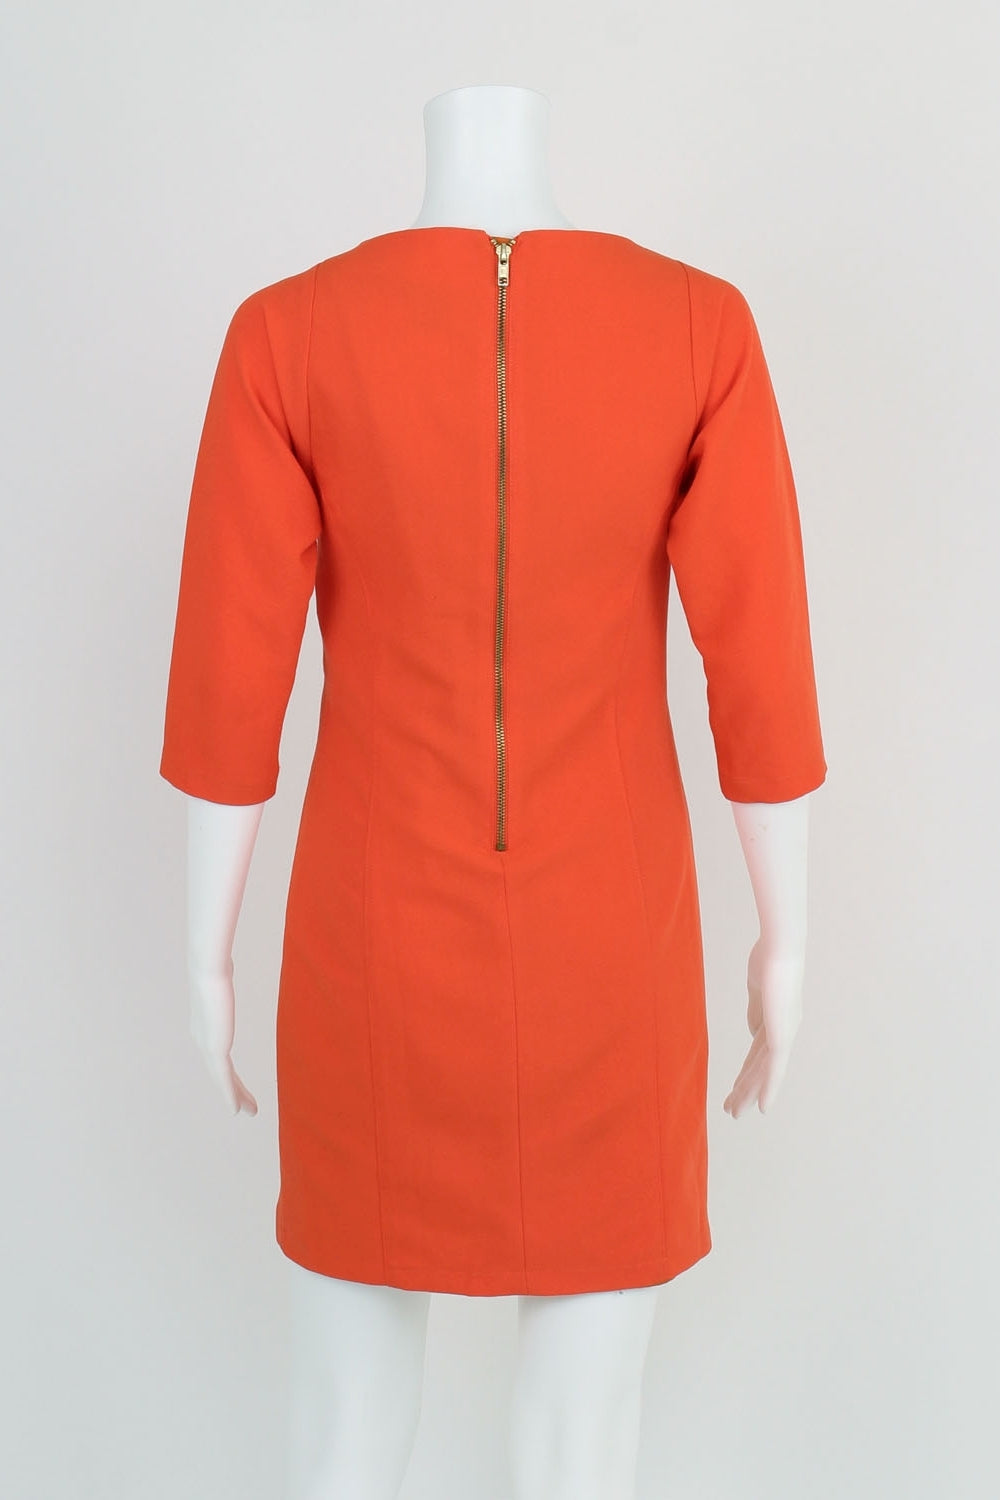 ASOS Orange Tie Front Dress 4